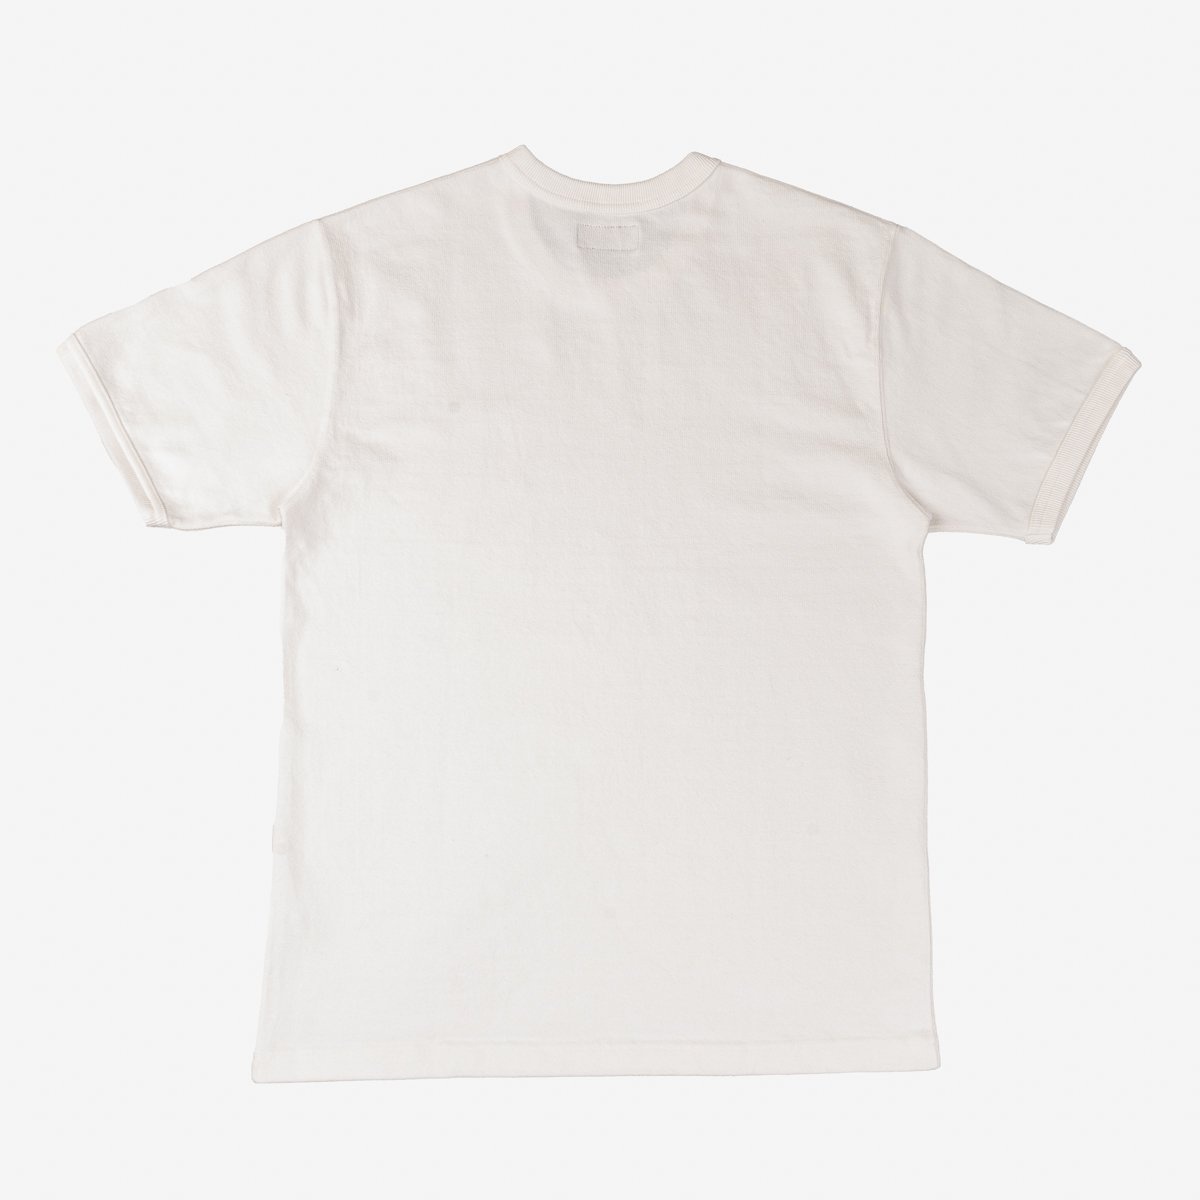 IHT-1600-WHT 11oz Cotton Knit Crew Neck T-Shirt - White - 5